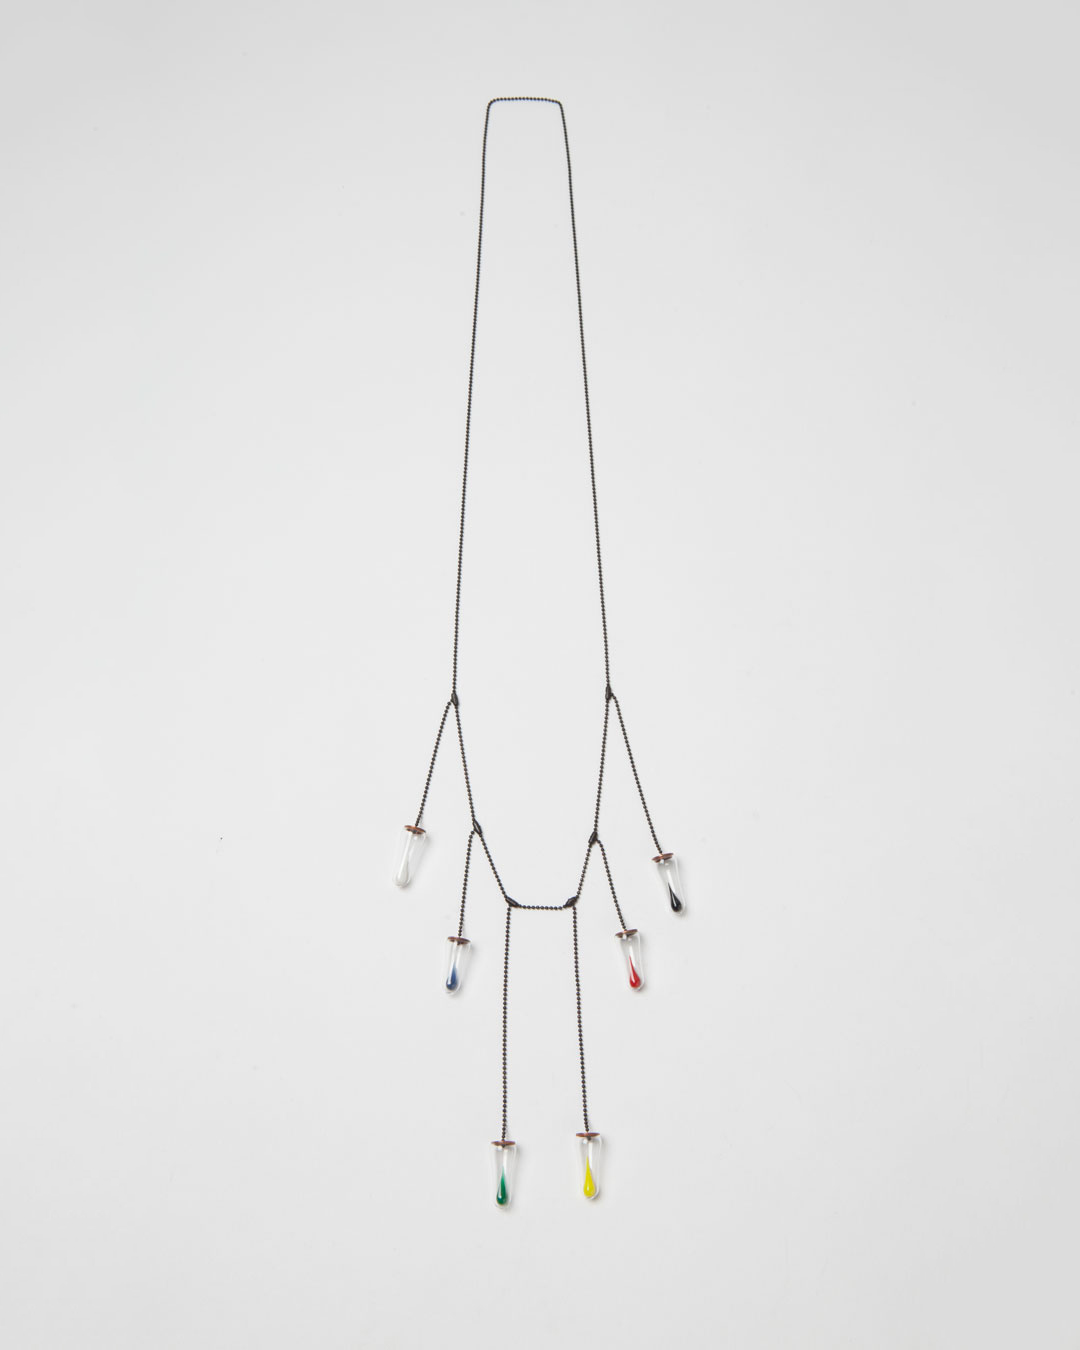 Annamaria Leiste, Colours Cry, 2014, ketting; glas, gekleurd glas, koper, zilver, 400 x 100 x 10 mm, €970